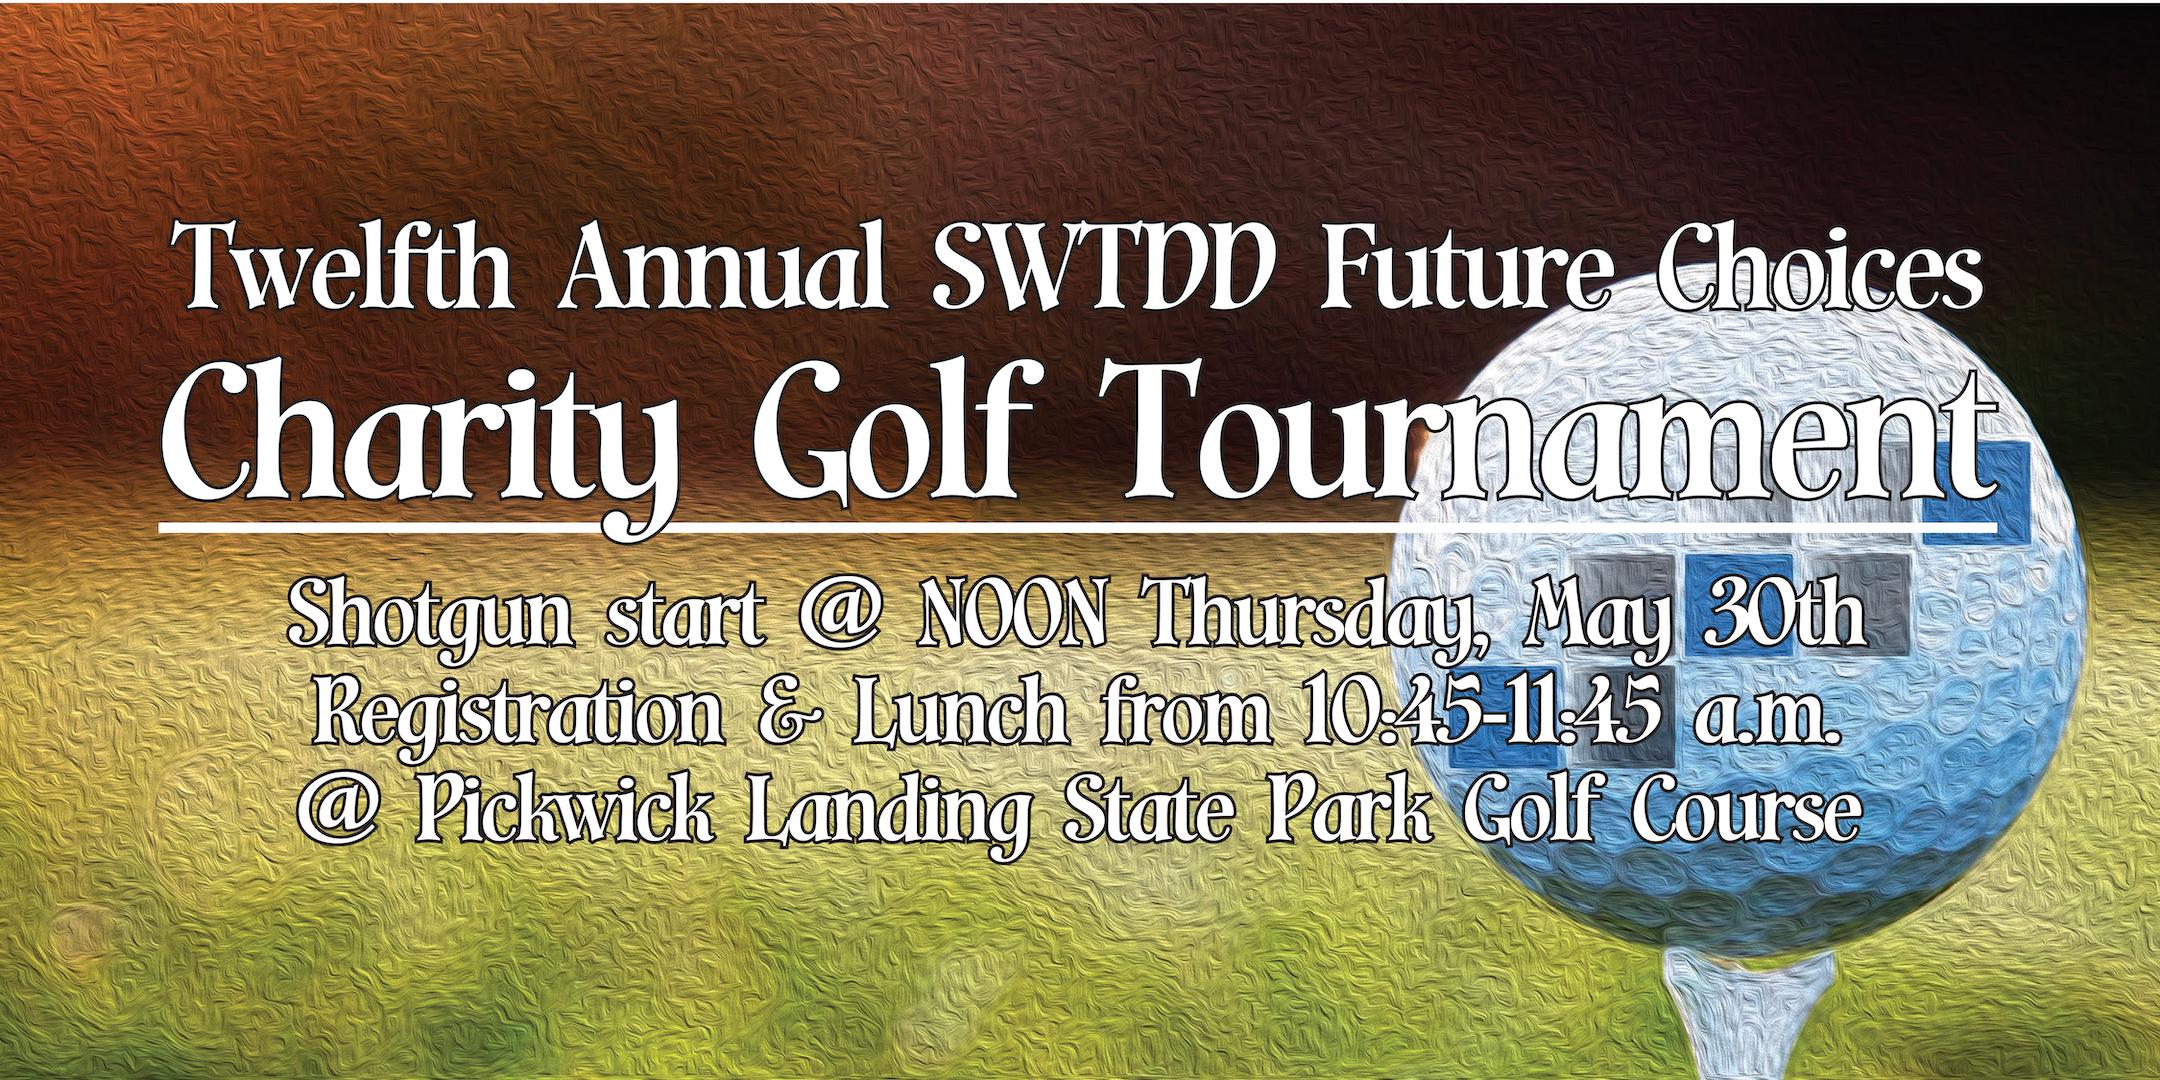 Twelfth Annual SWTDD Future Choice Charity Golf Tournament